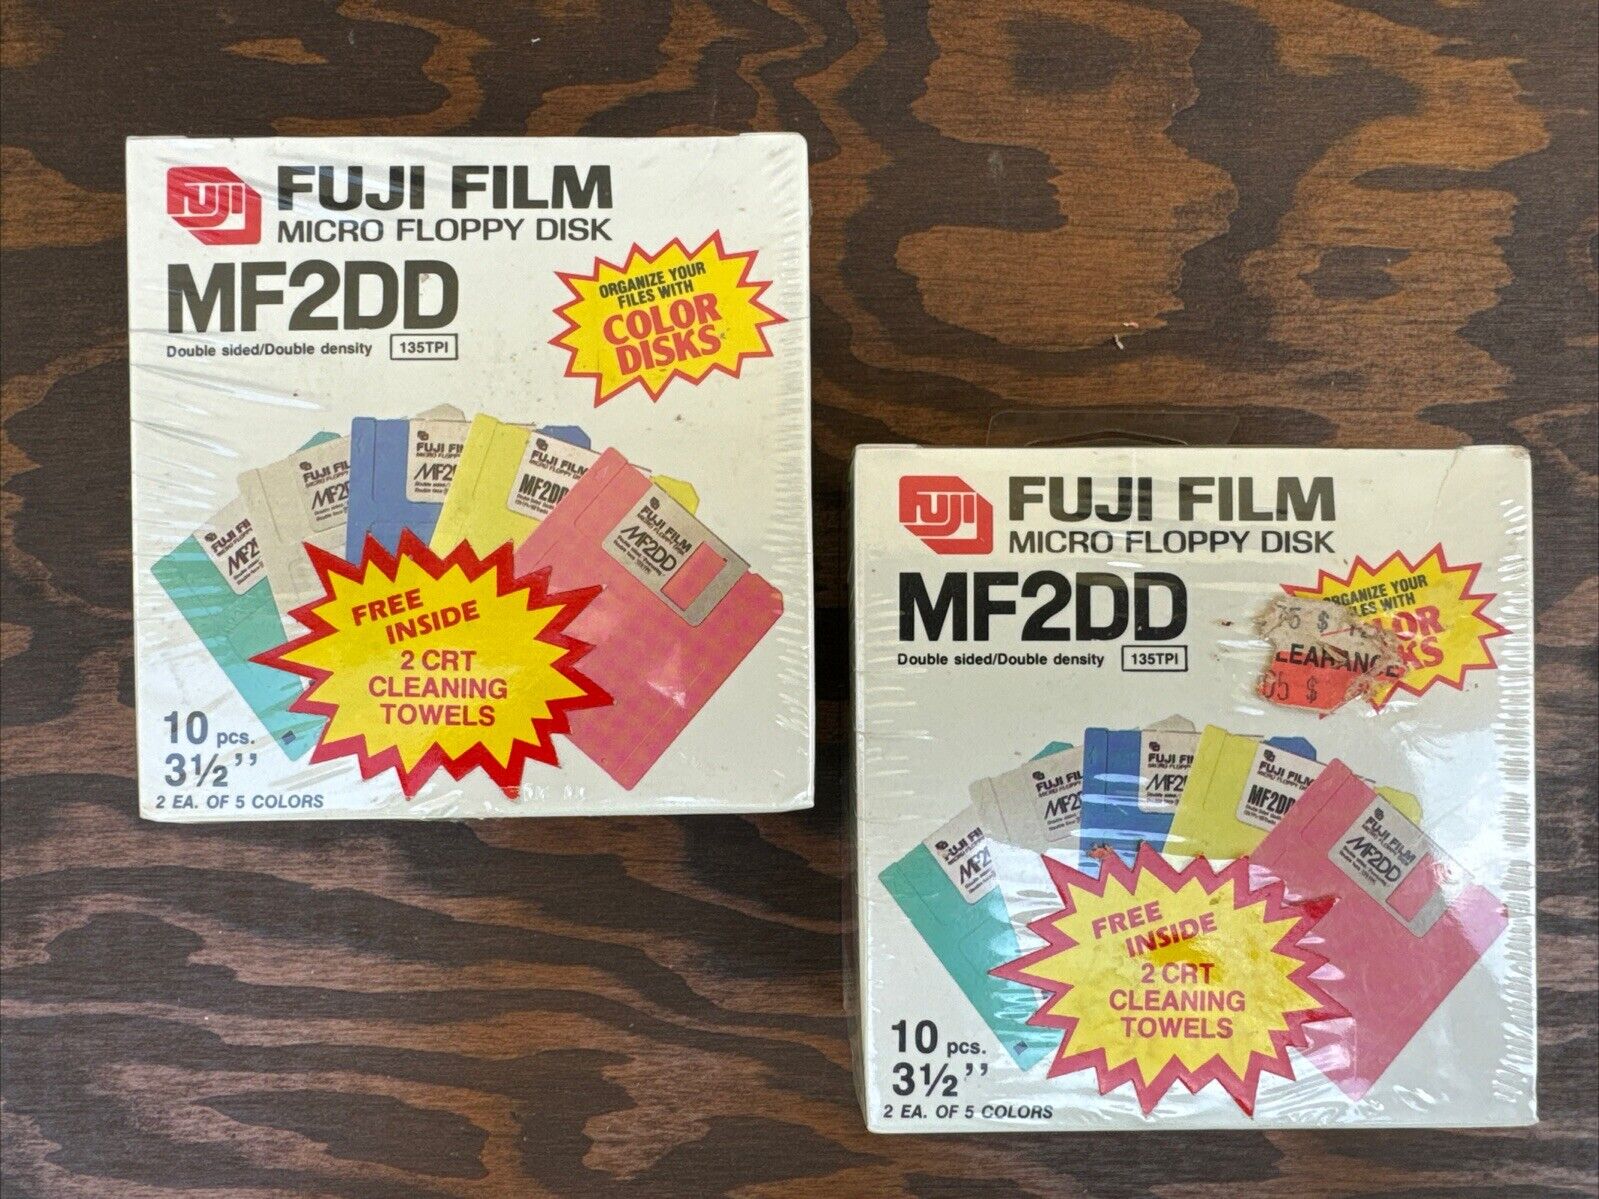 NEW Fujifilm MF2DD Double Sided Double Density 3.5